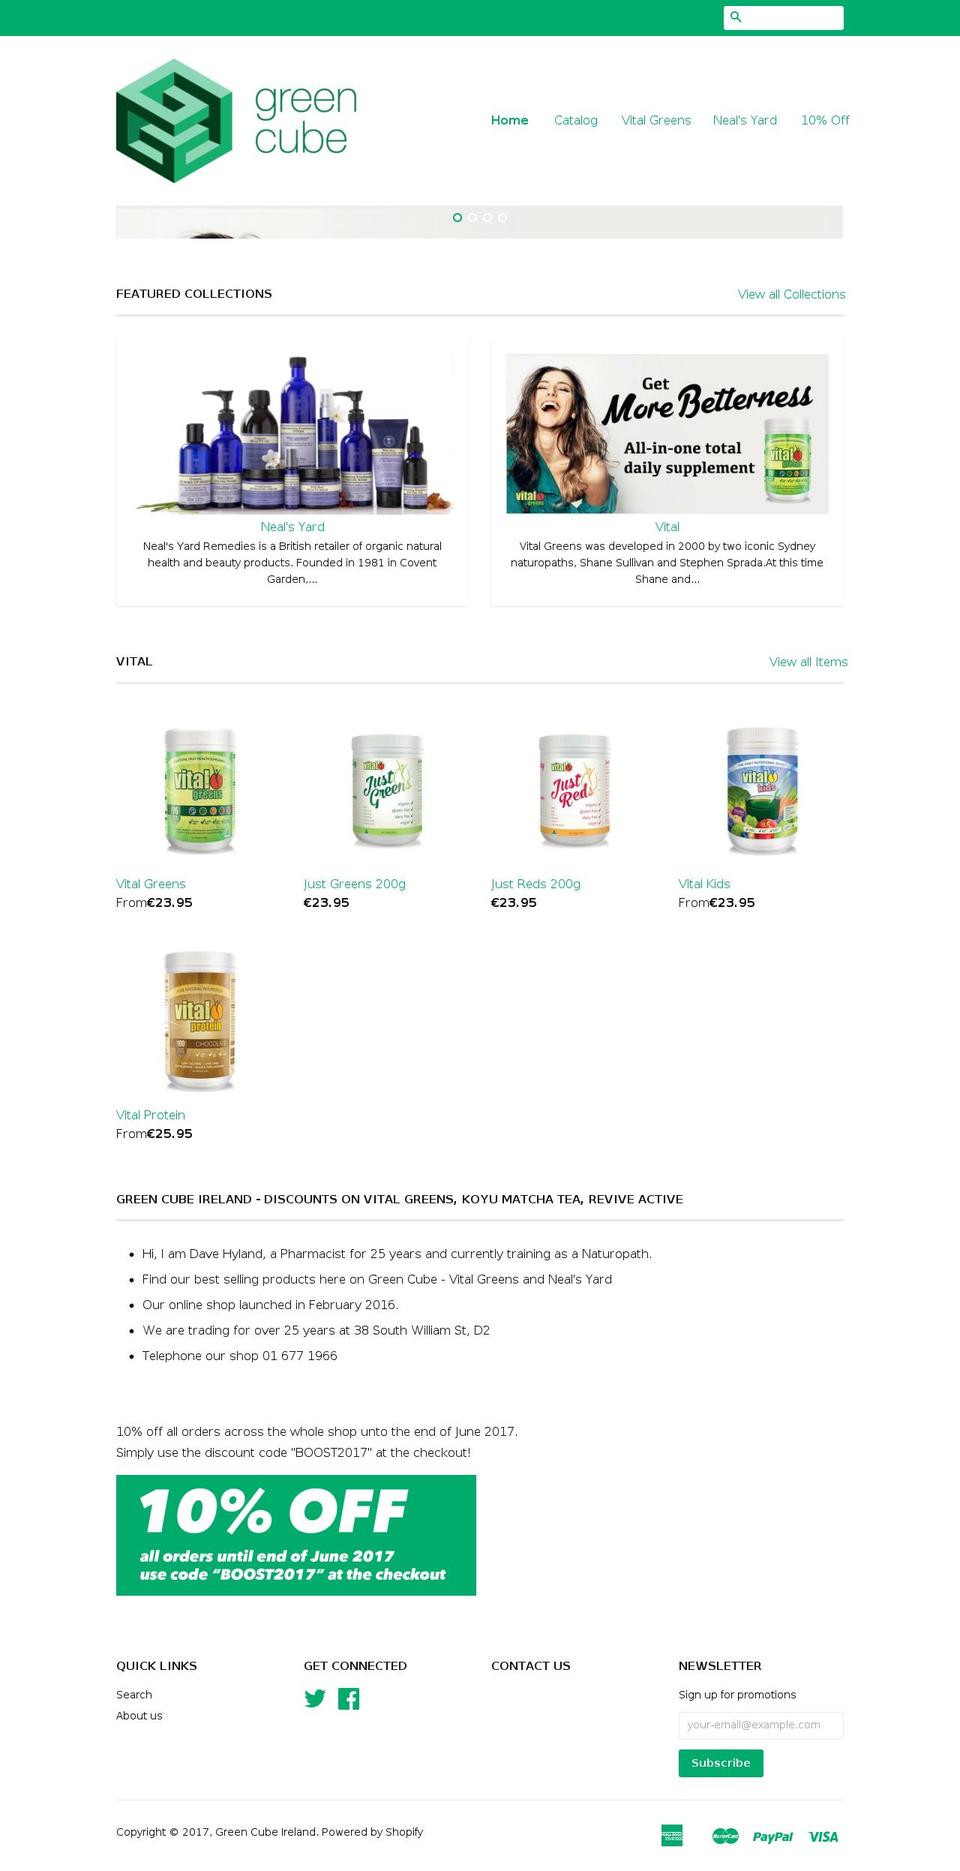 greencube.ie shopify website screenshot